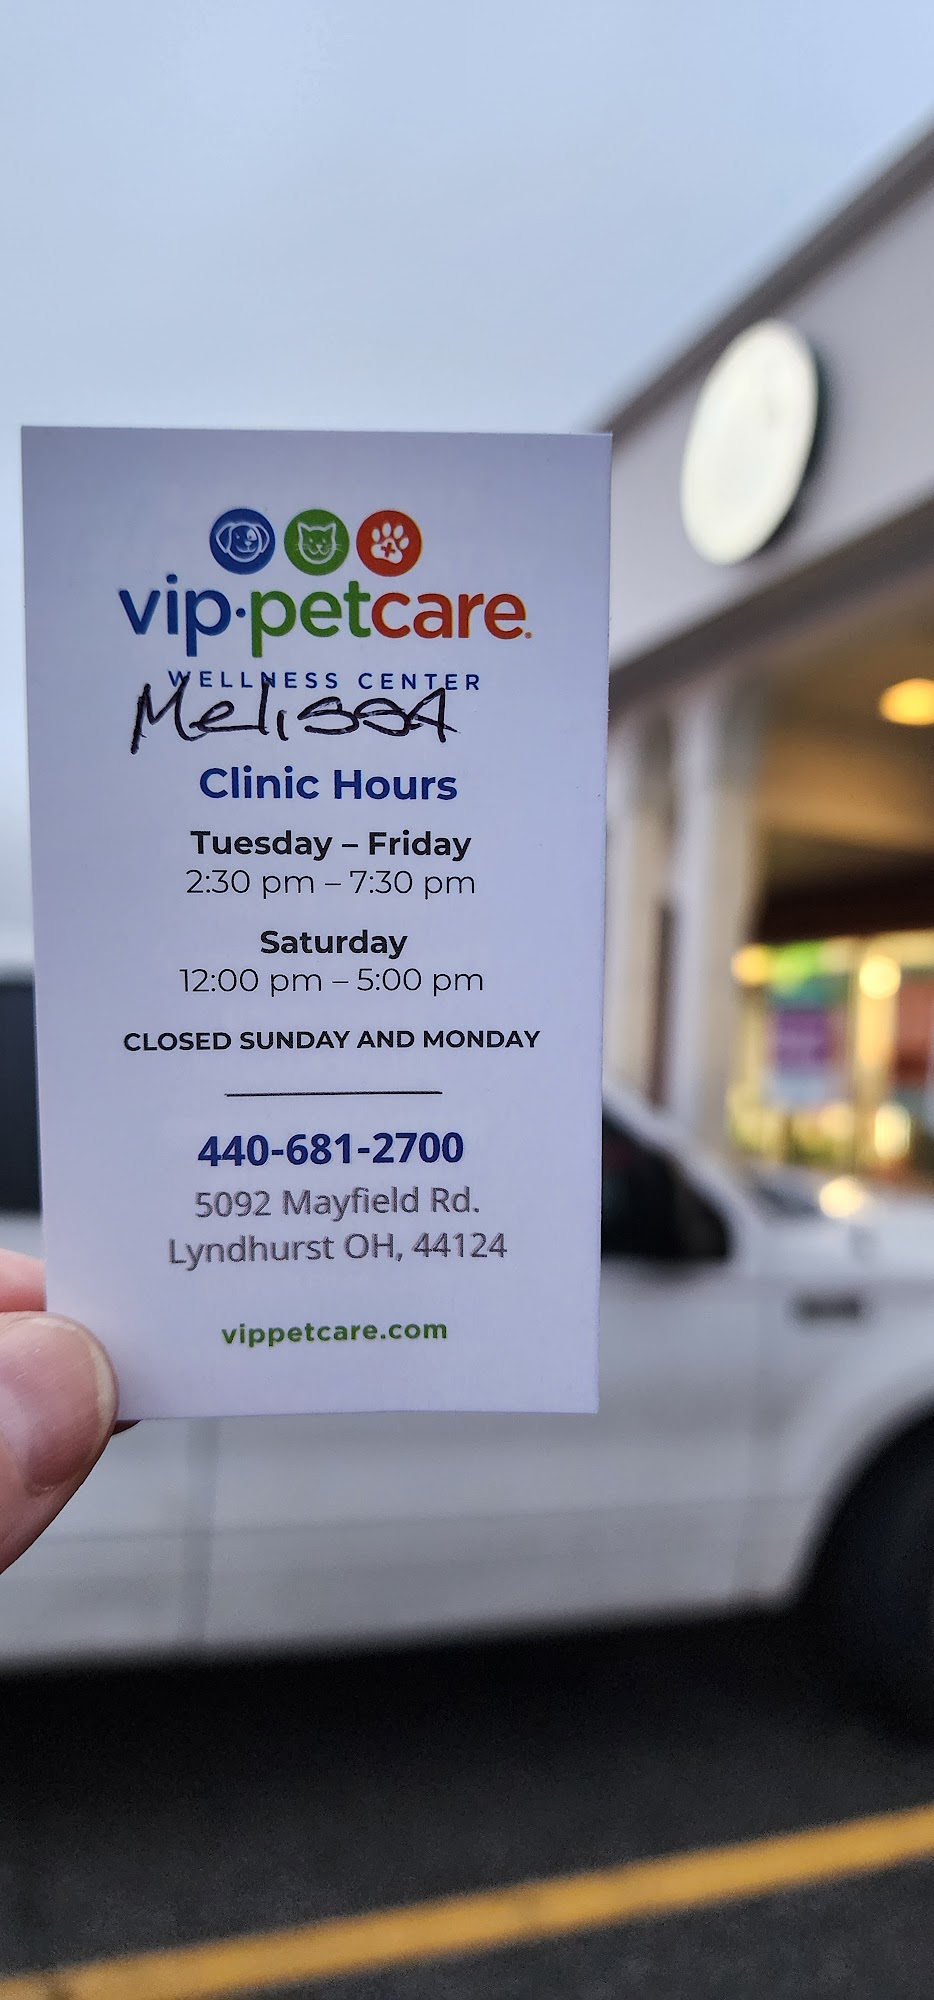 VIP Petcare Wellness Center 5092 Mayfield Rd, Lyndhurst Ohio 44124